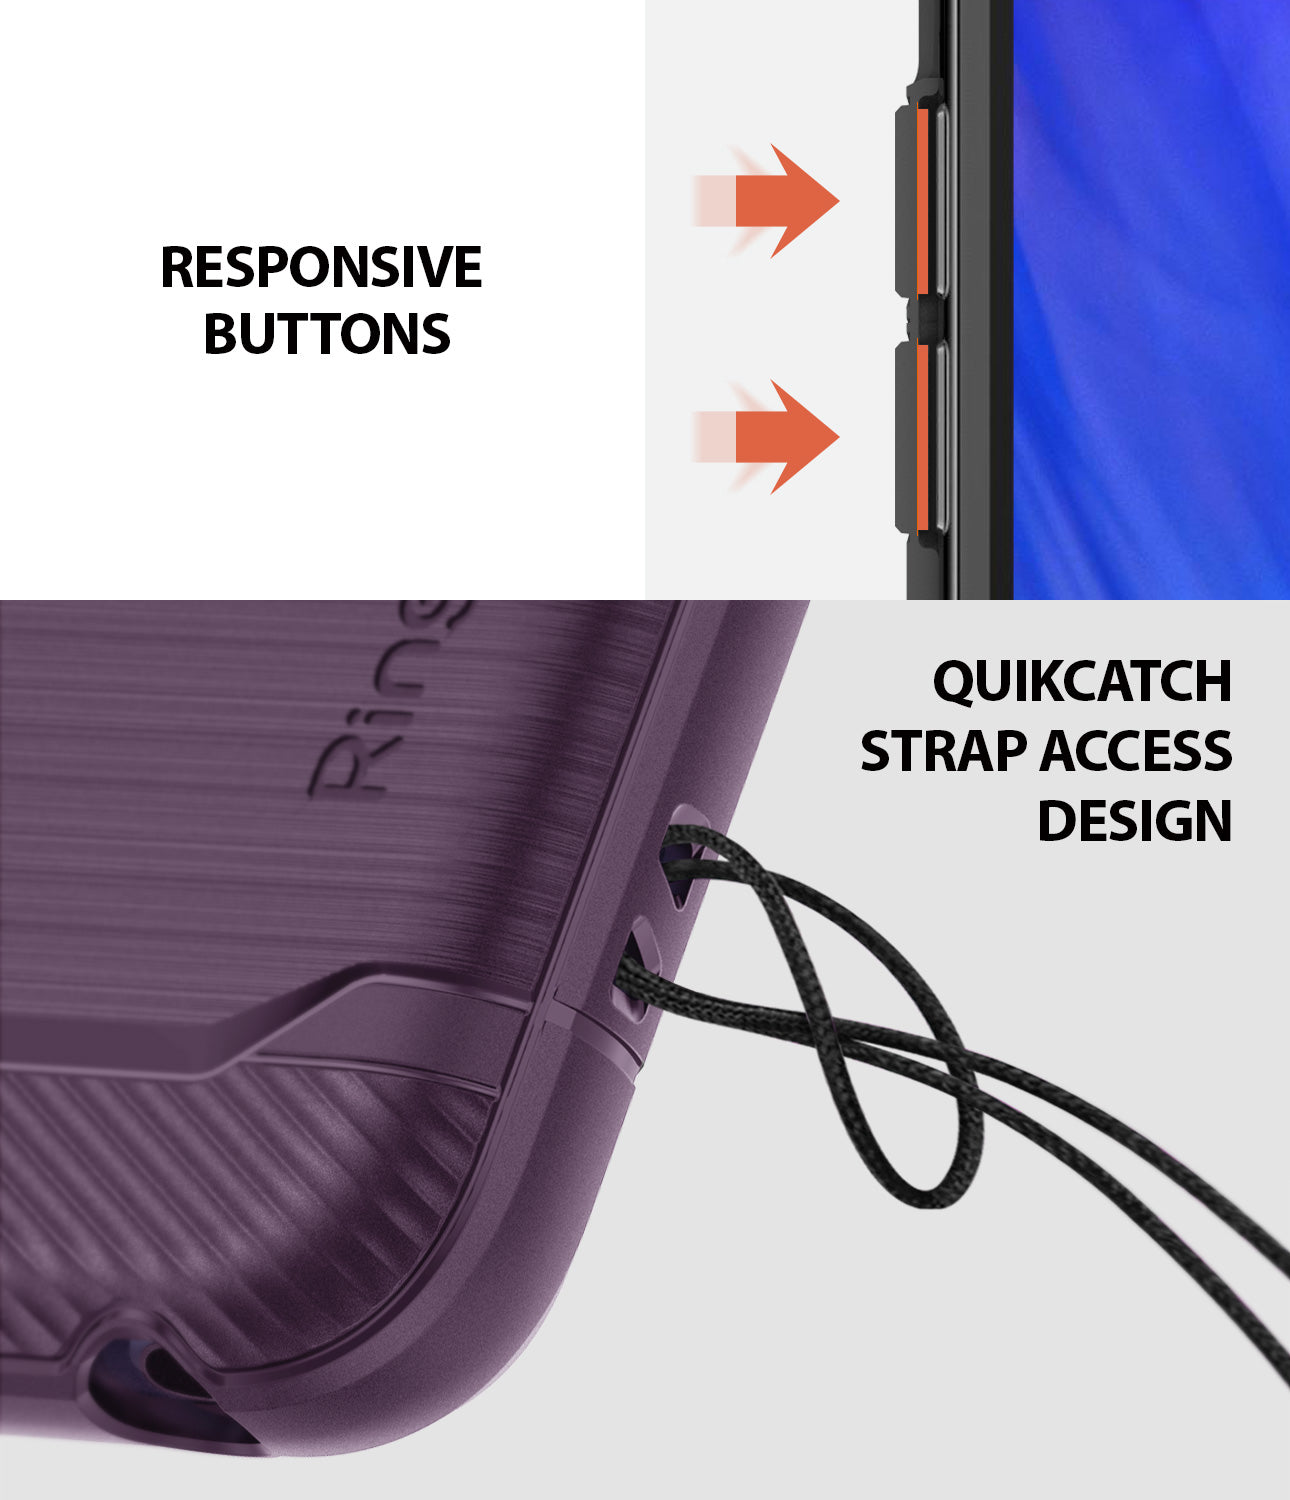 LG V40 ThinQ Case | Onyx - Responsive Buttons. QuikCatch Strap Access Design